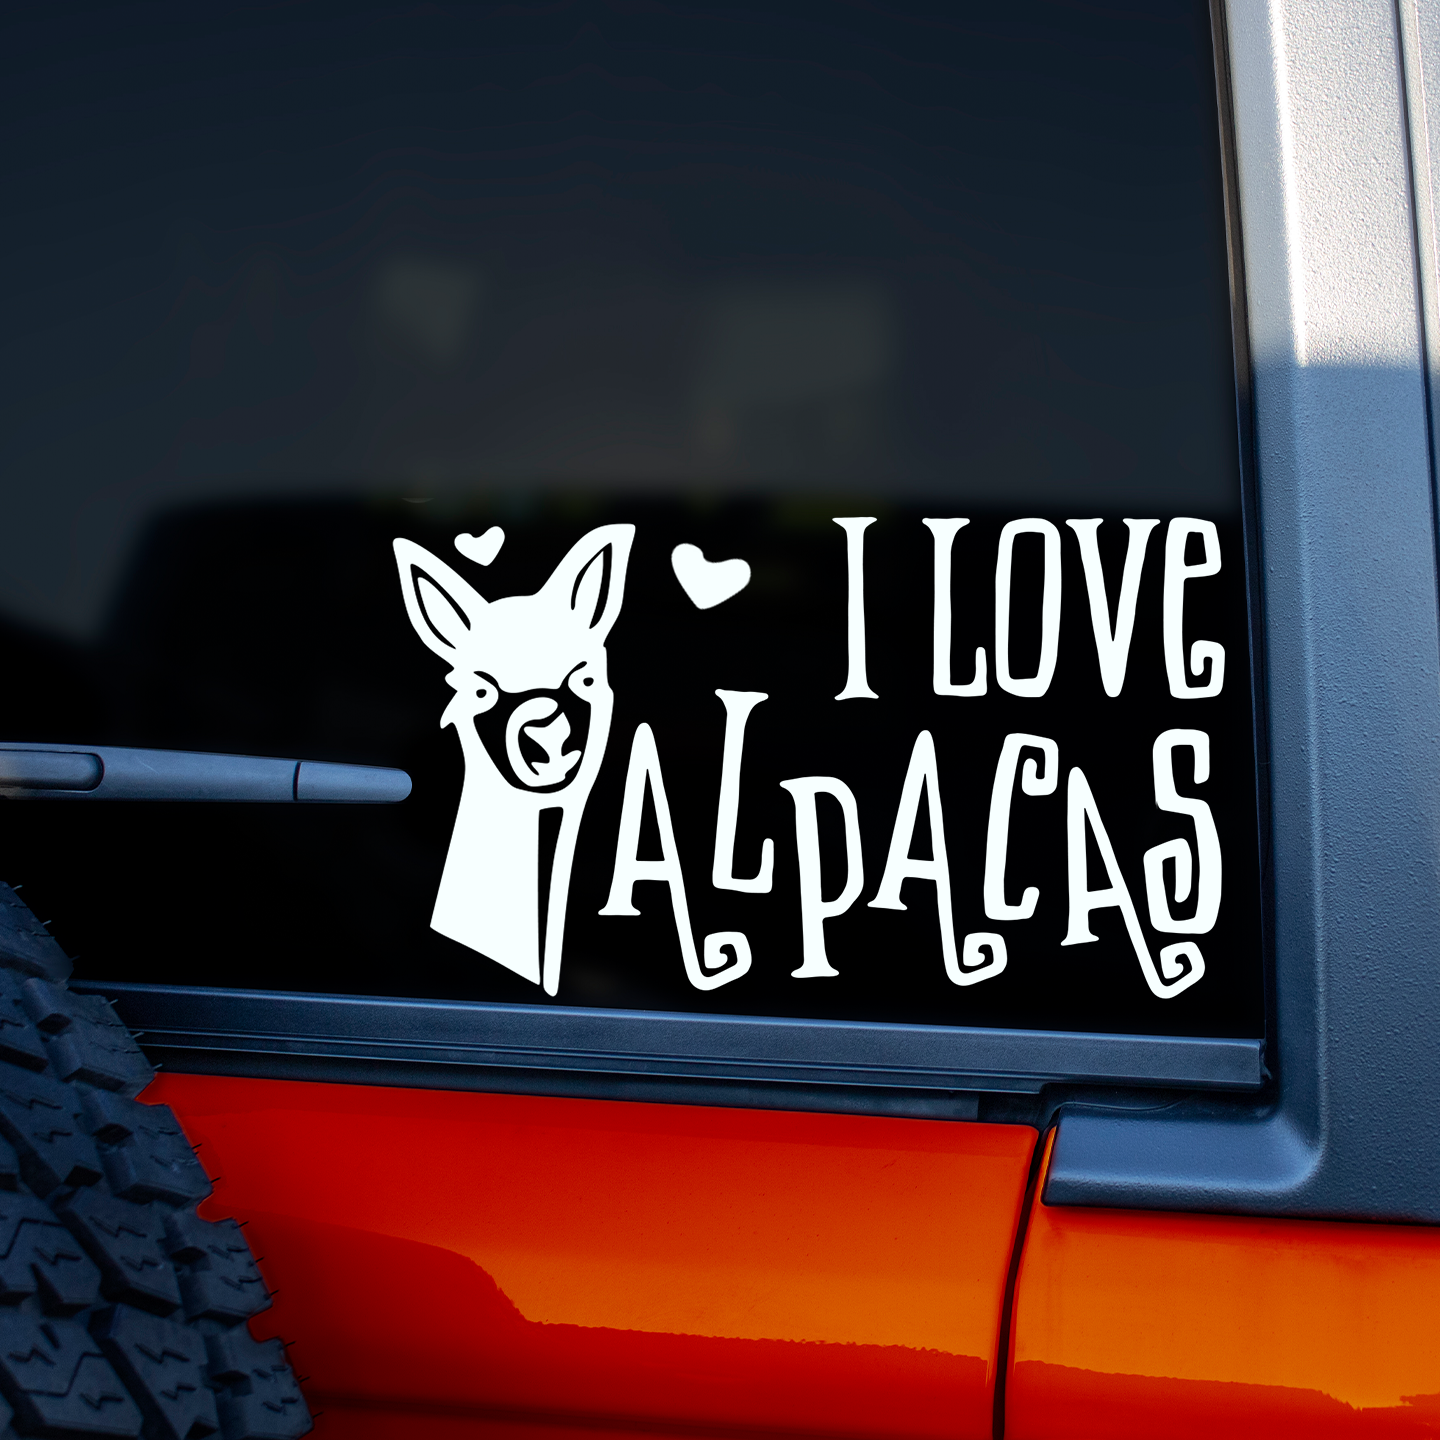 I Love Alpacas Sticker